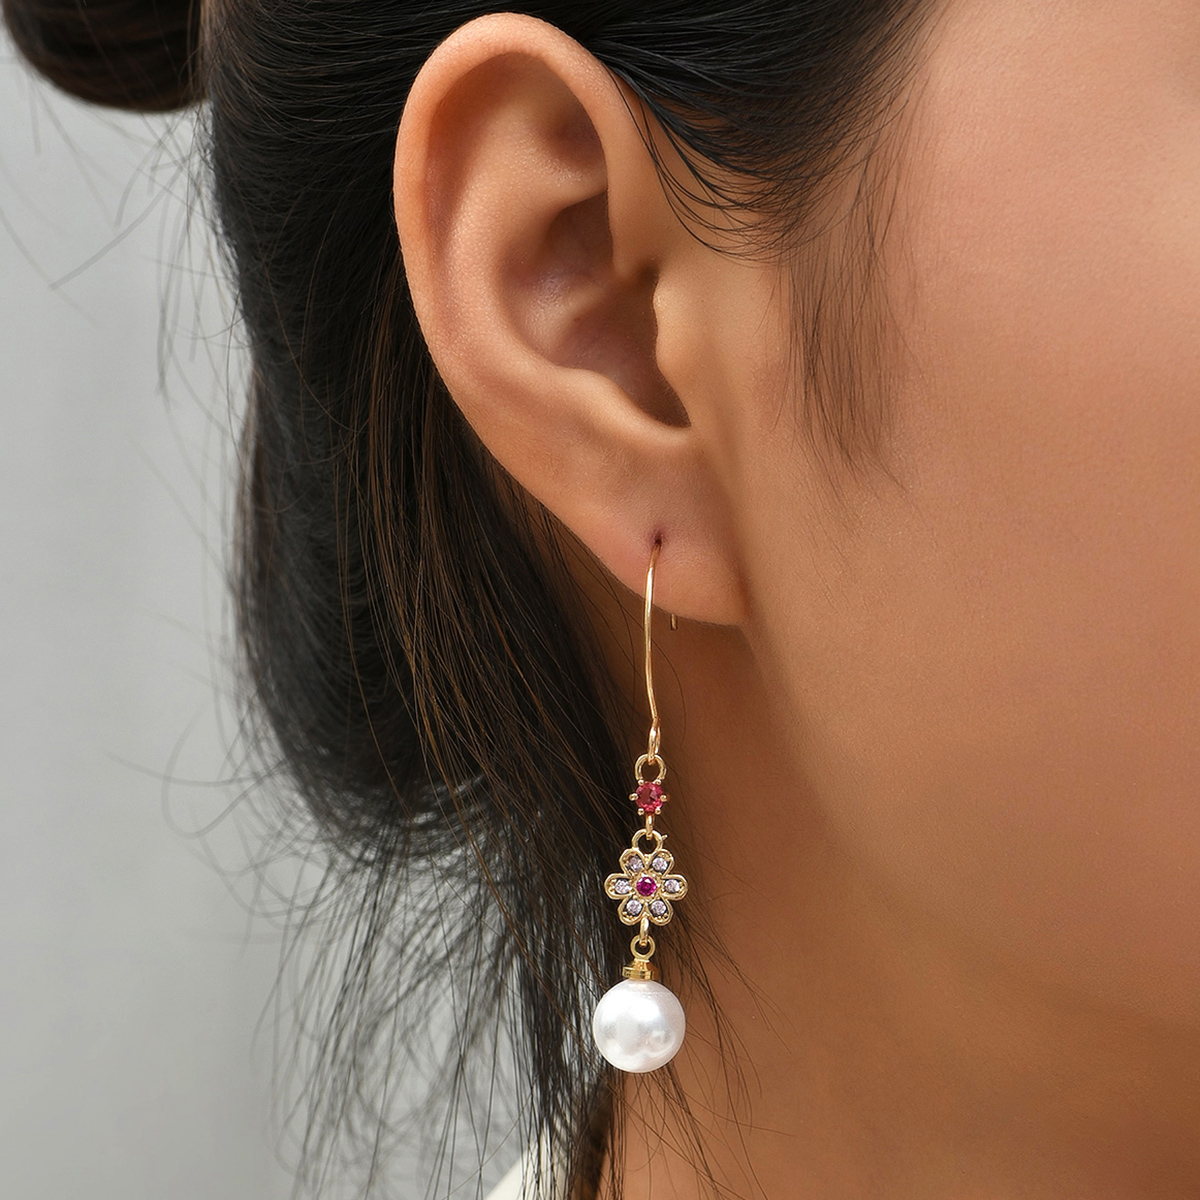 10pairs_Gold Tone Red Crystal Pearl Drop Dangle Earrings_UK Seller_GCC030